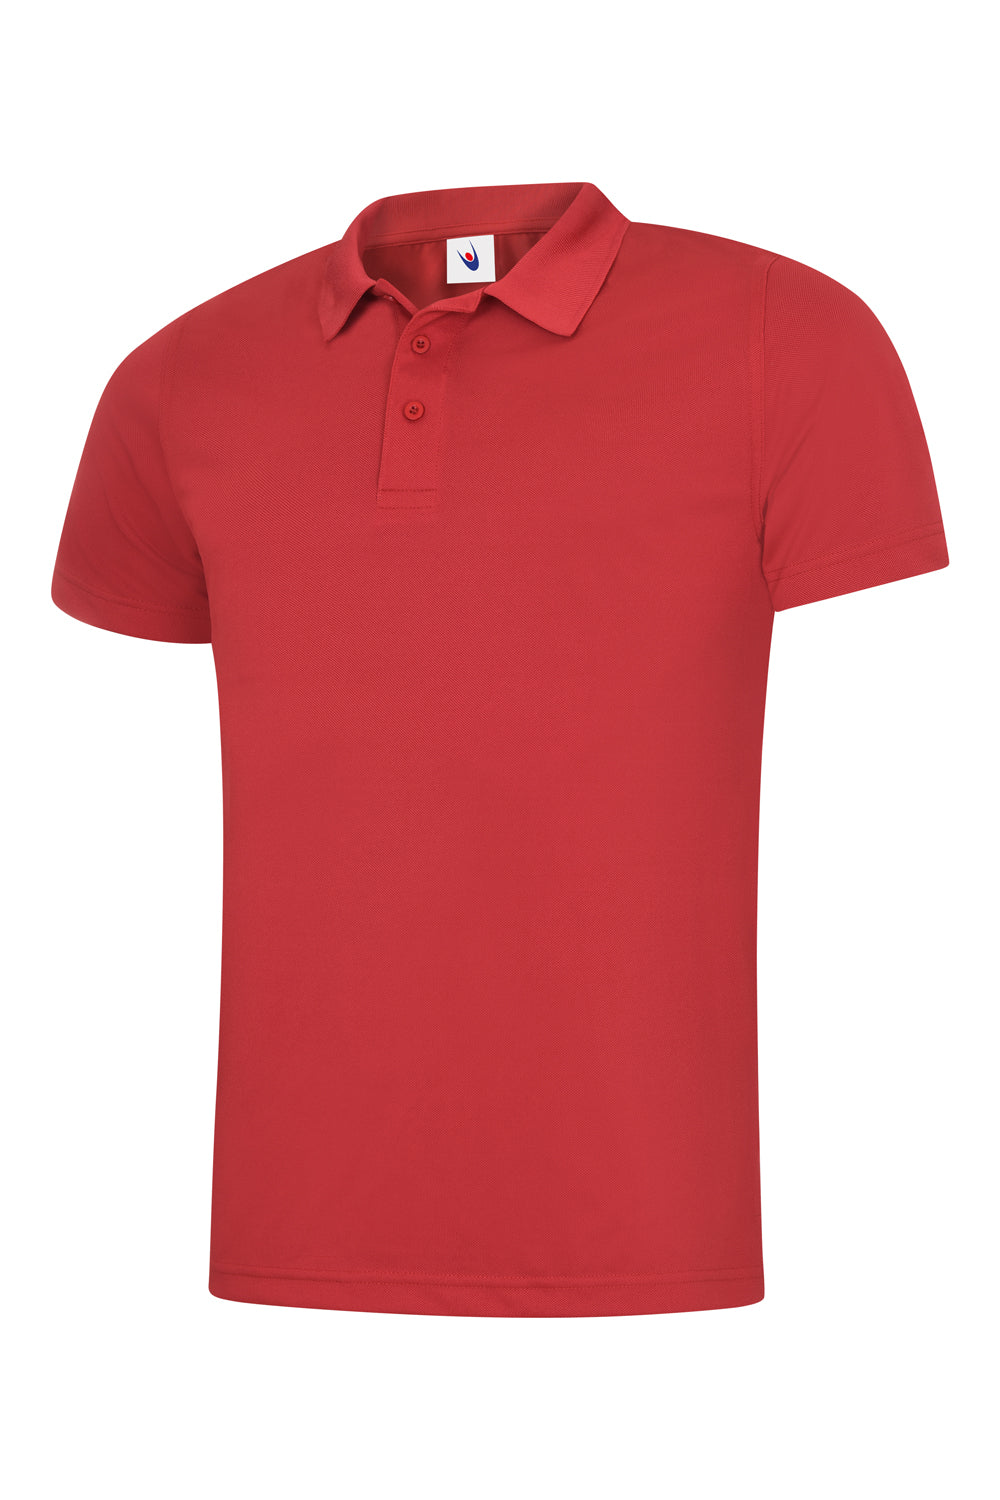 Uneek Mens Super Cool Workwear Poloshirt UC127 - Red